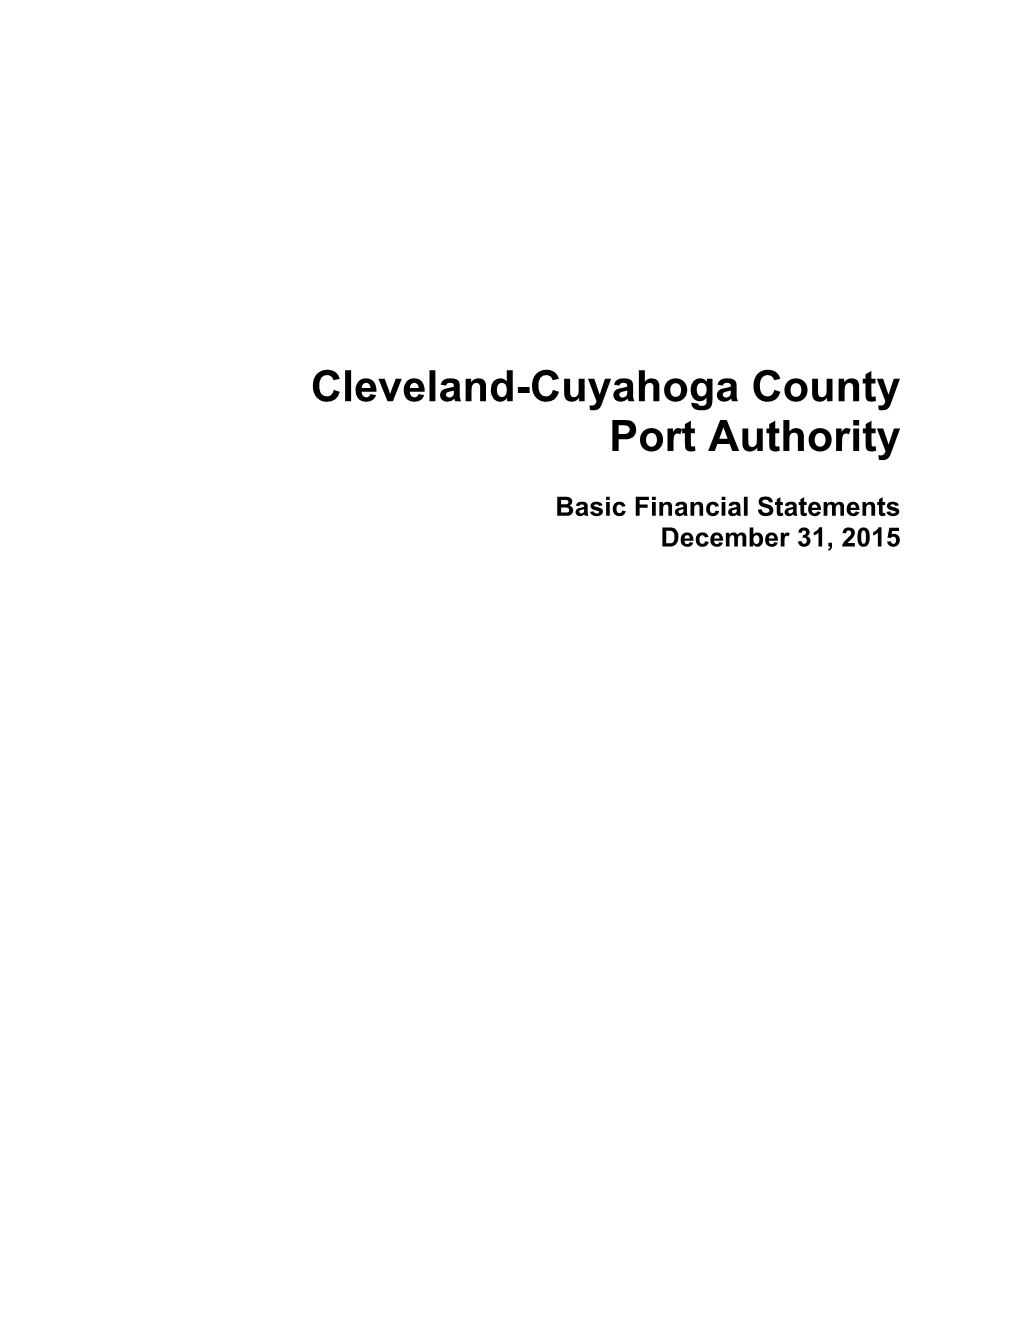 Cleveland-Cuyahoga County Port Authority